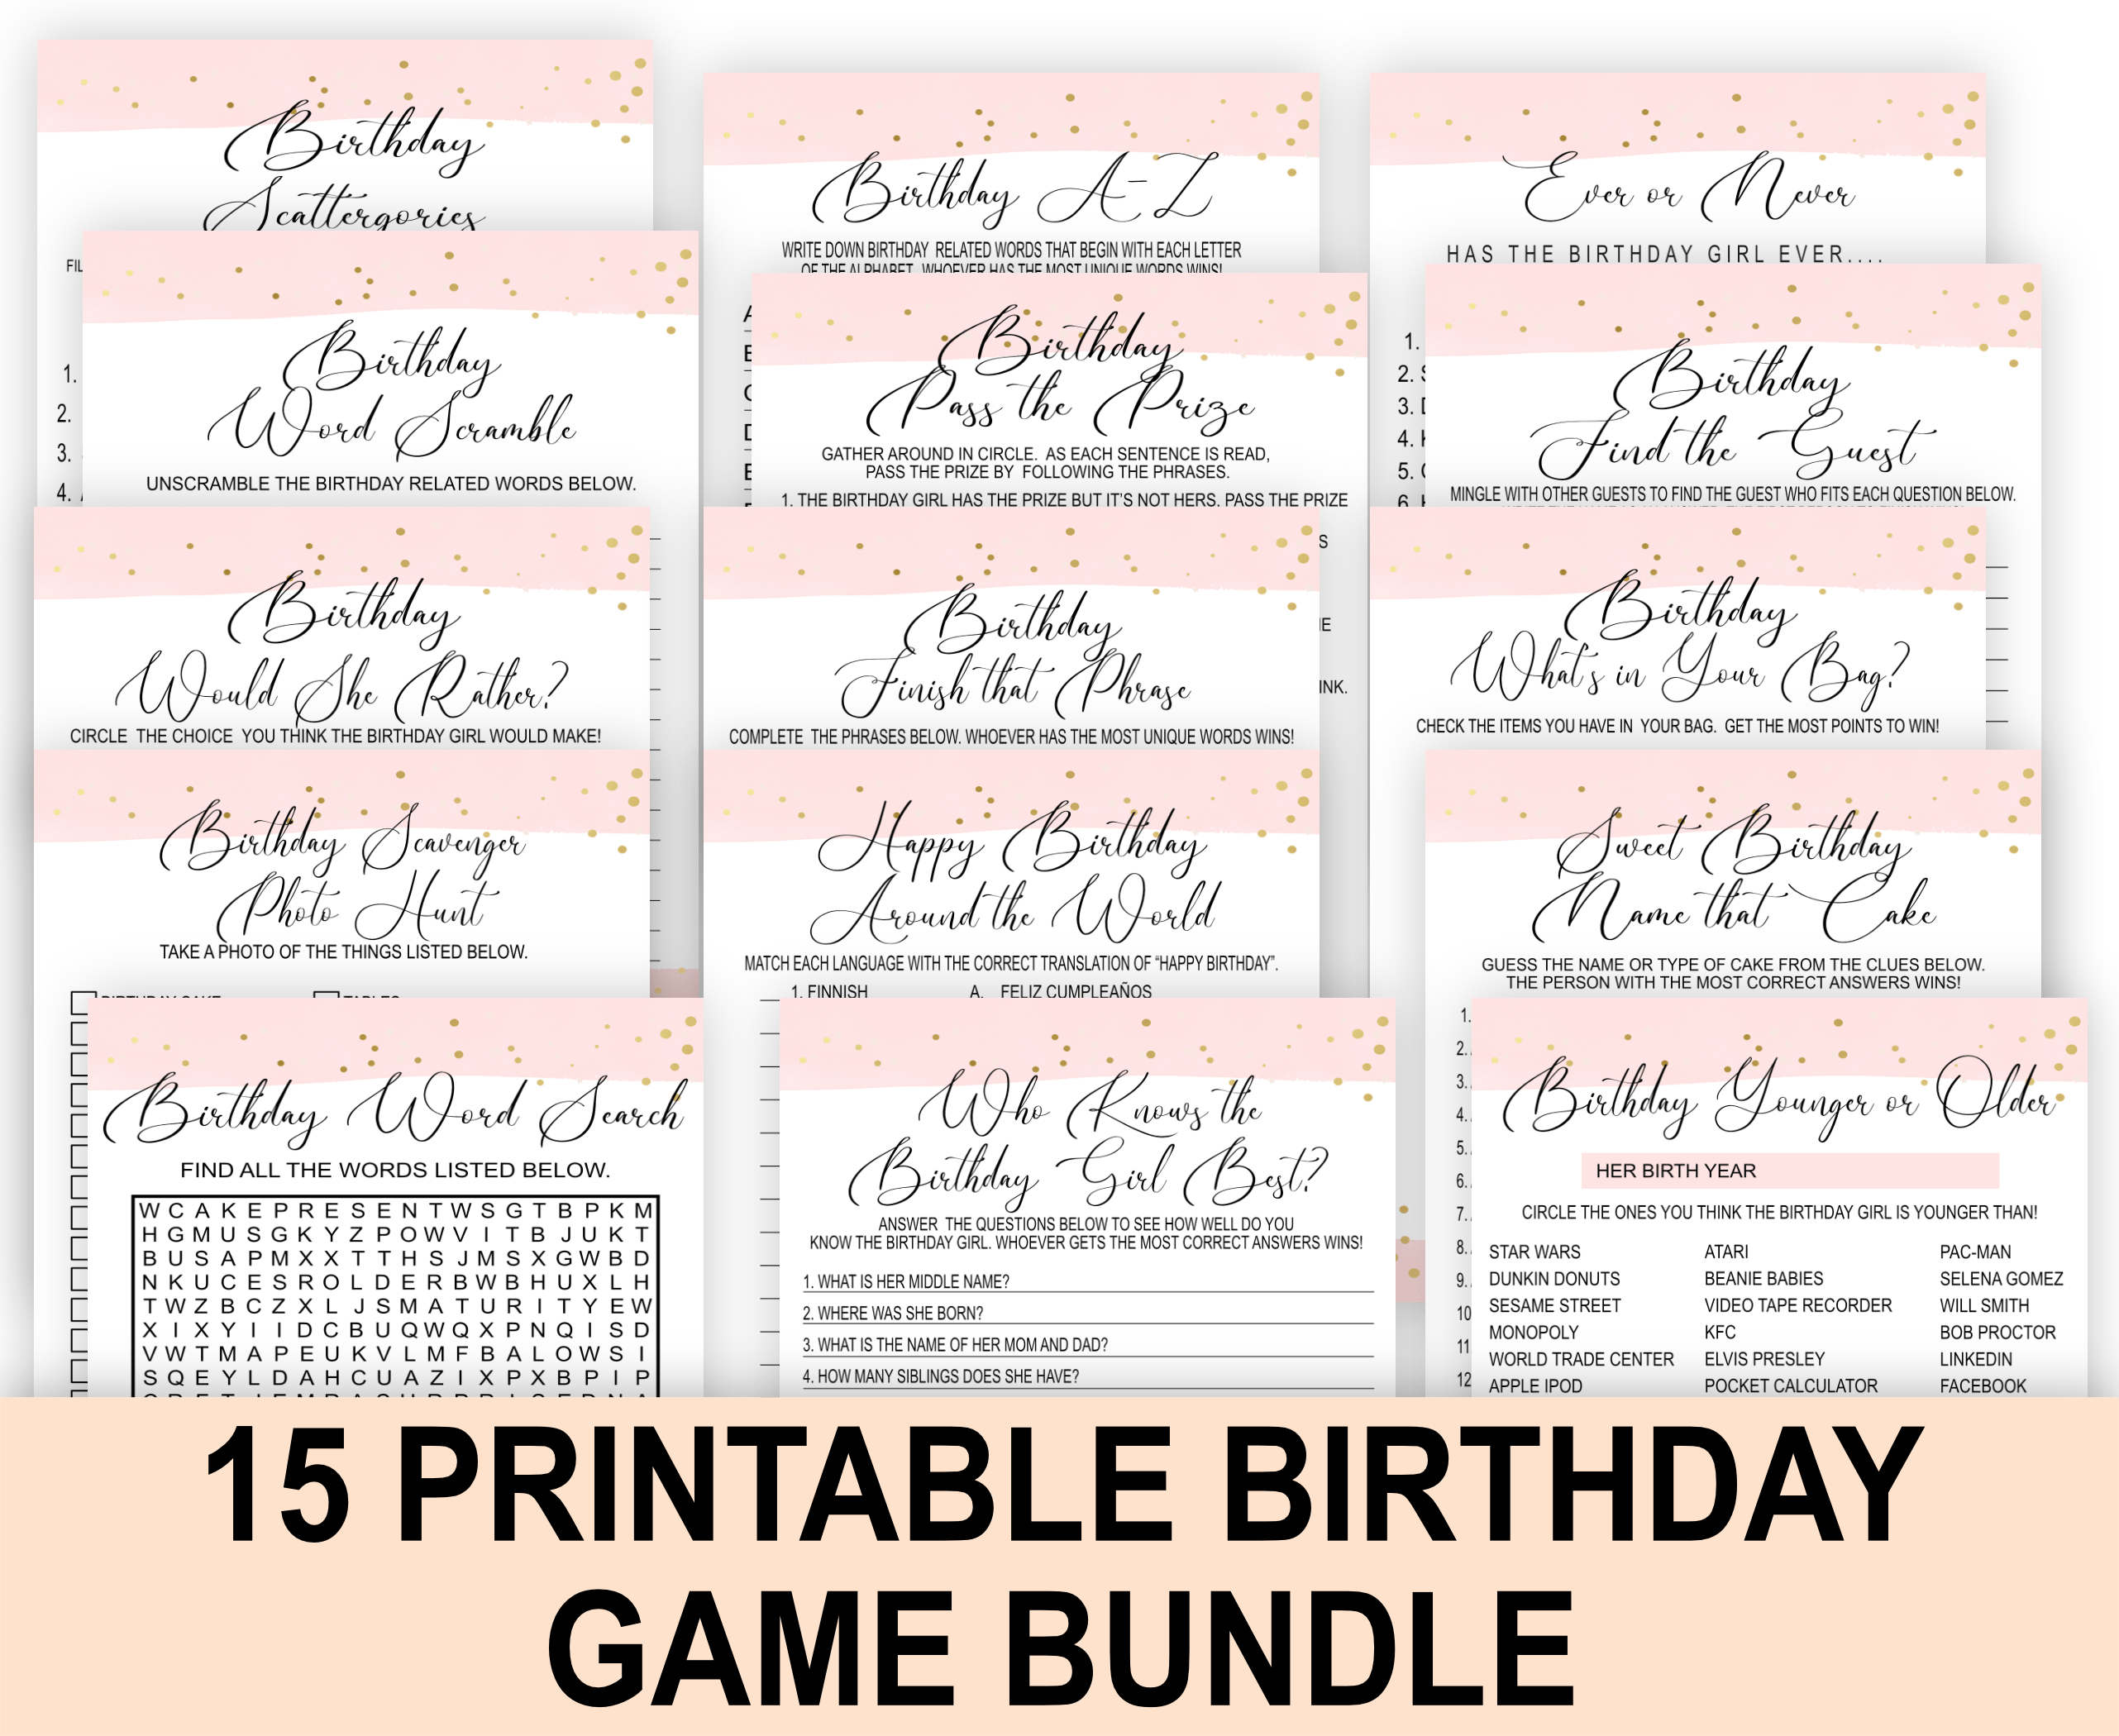 Birthday Games 15 PRINTABLE BIRTHDAY PARTY GAMES – PINK Adult Birthday